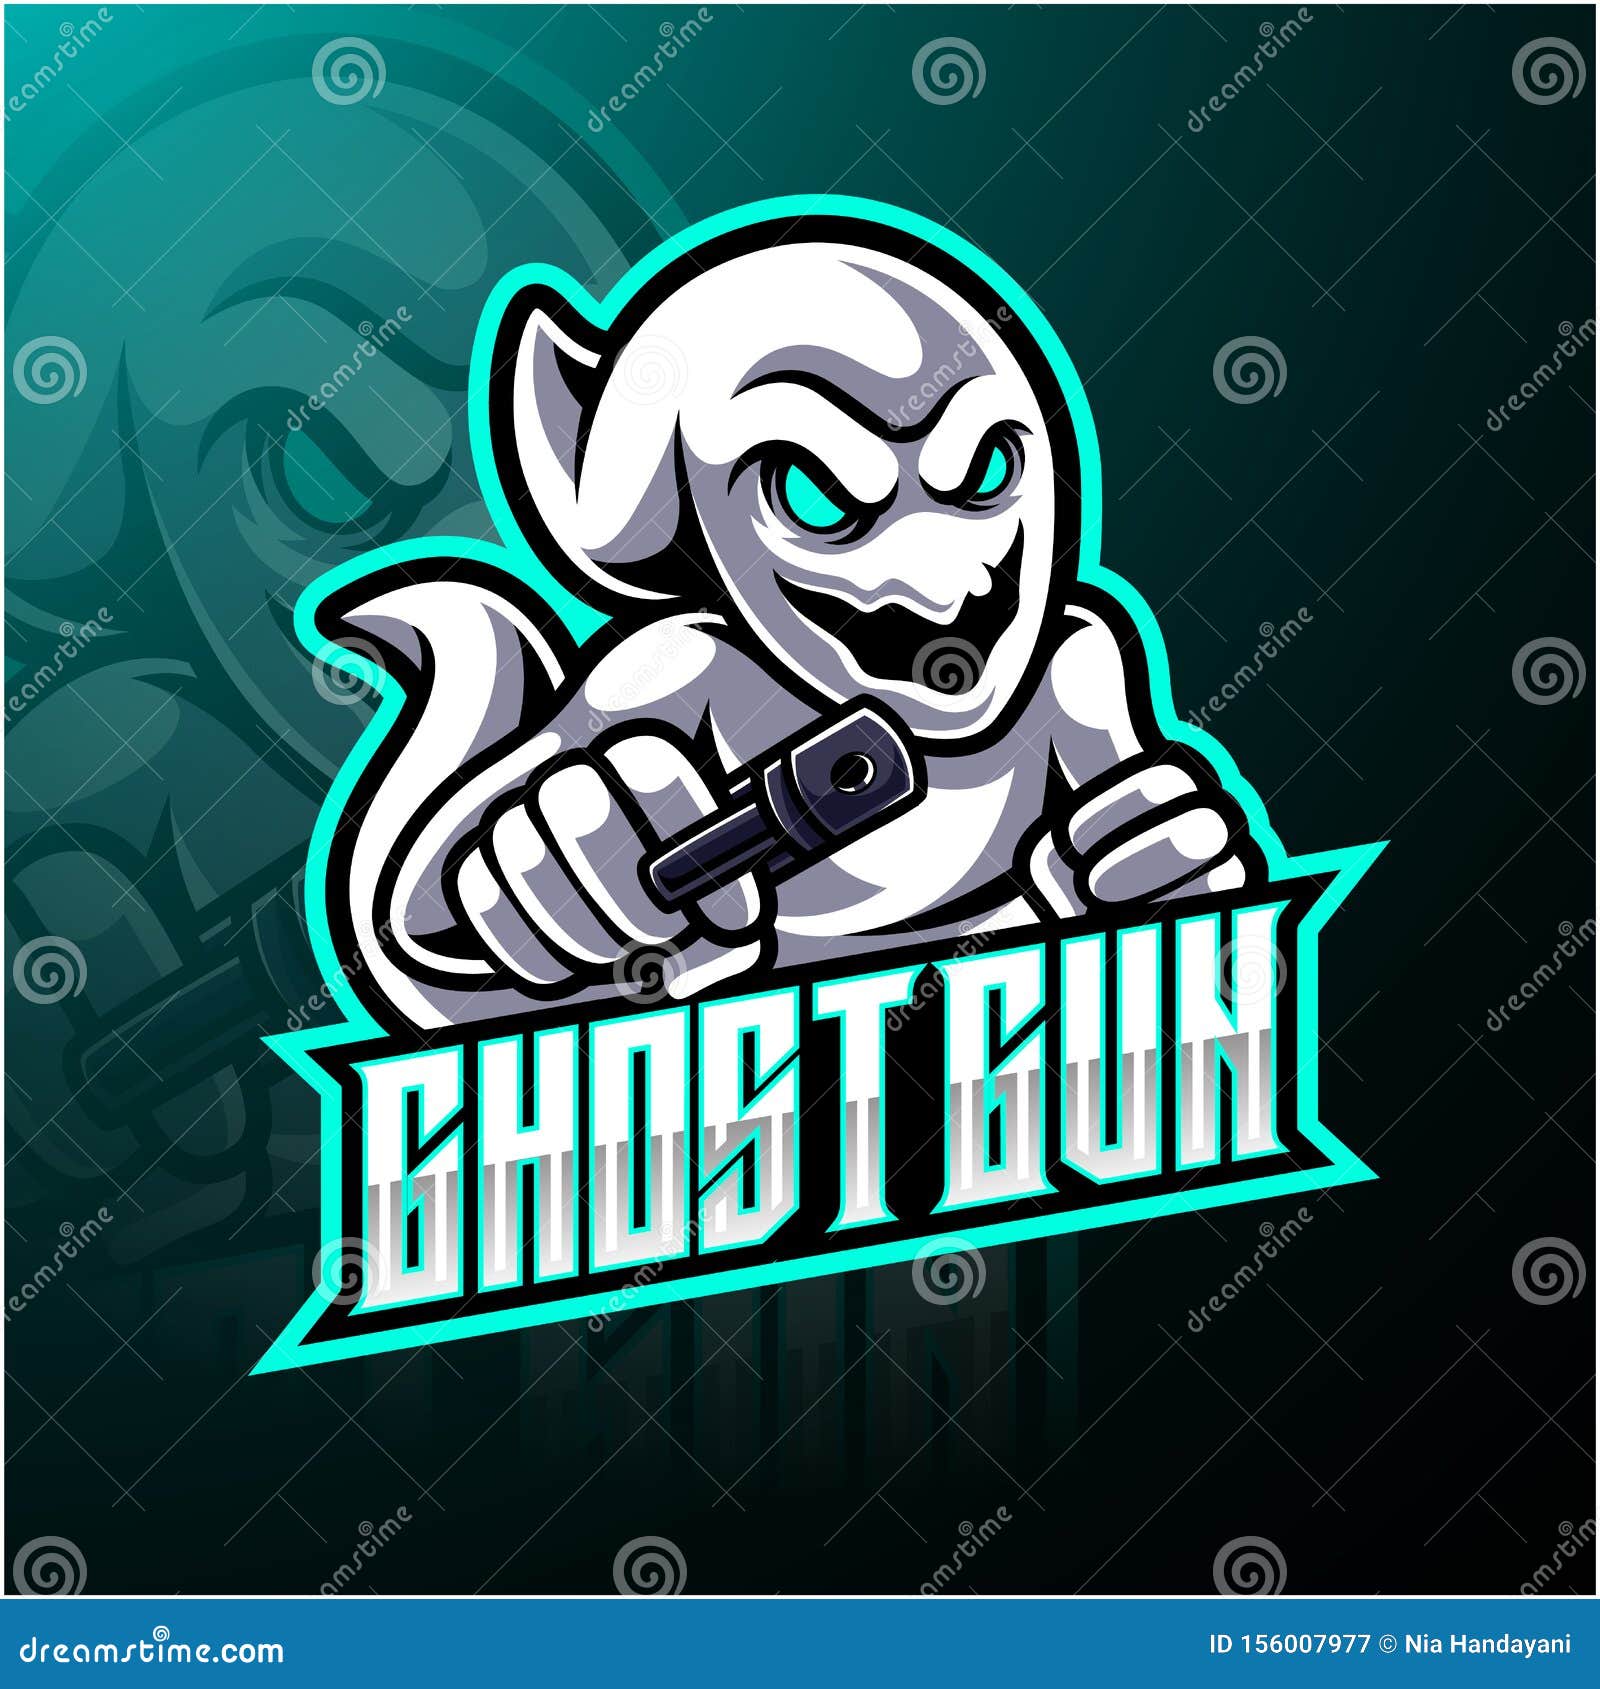 Mysterious gamer esport mascot logo design on transparent